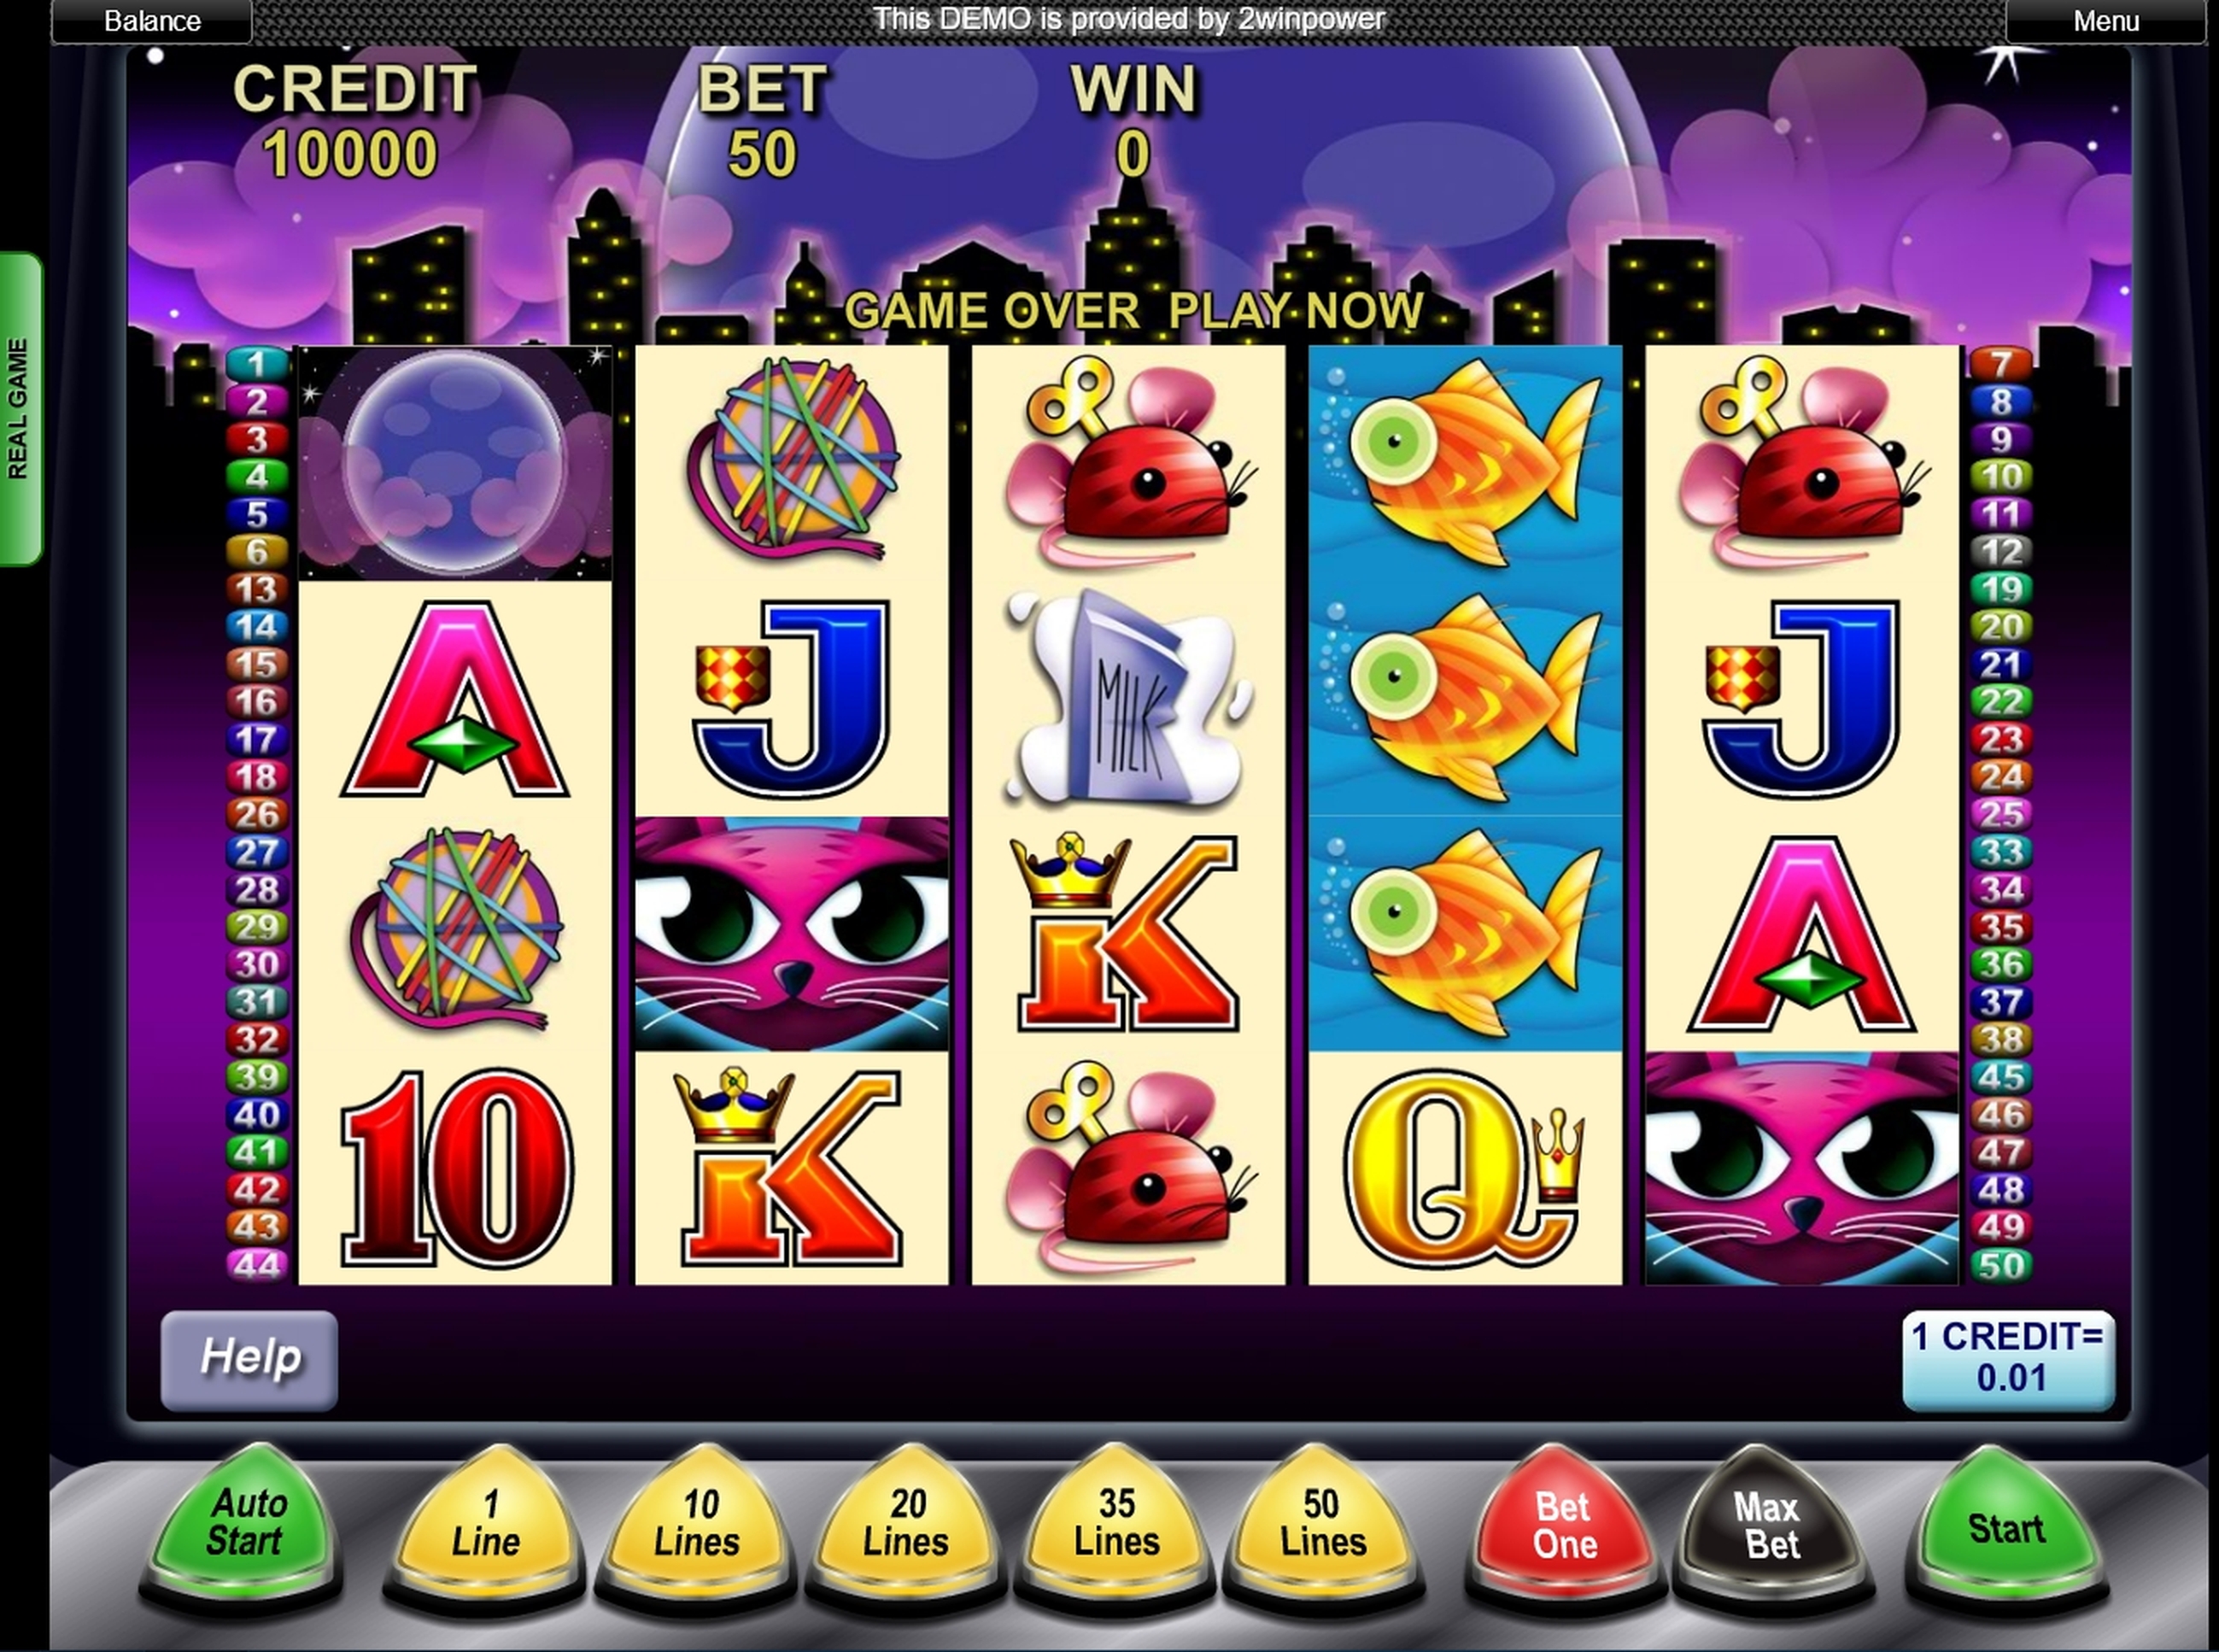 Play mobile casino canada